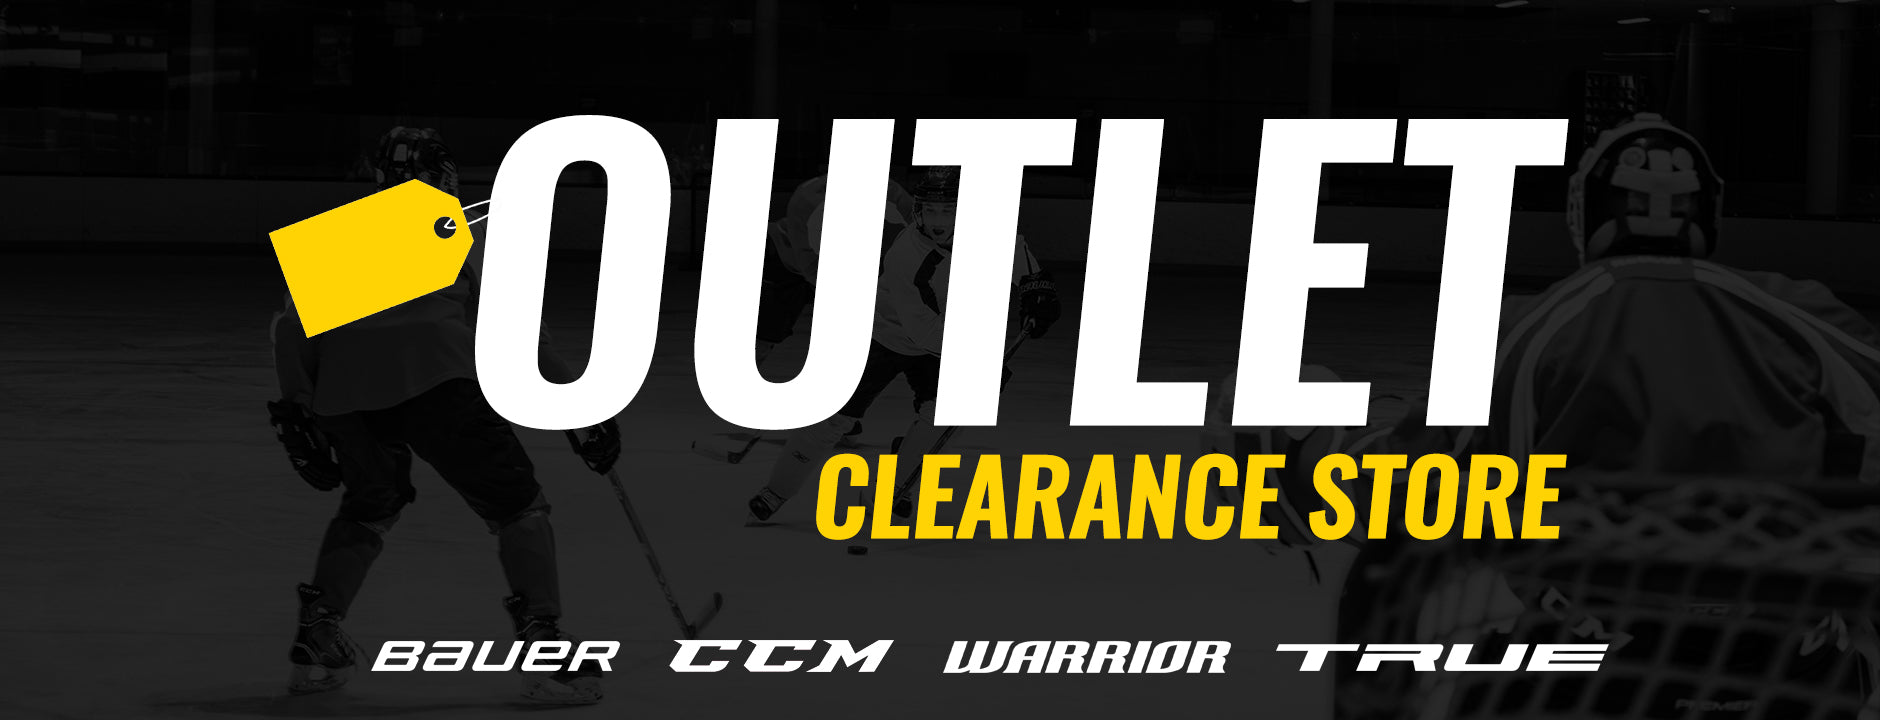 Clearance Hockey Equipment and Apparel Pro Hockey Life